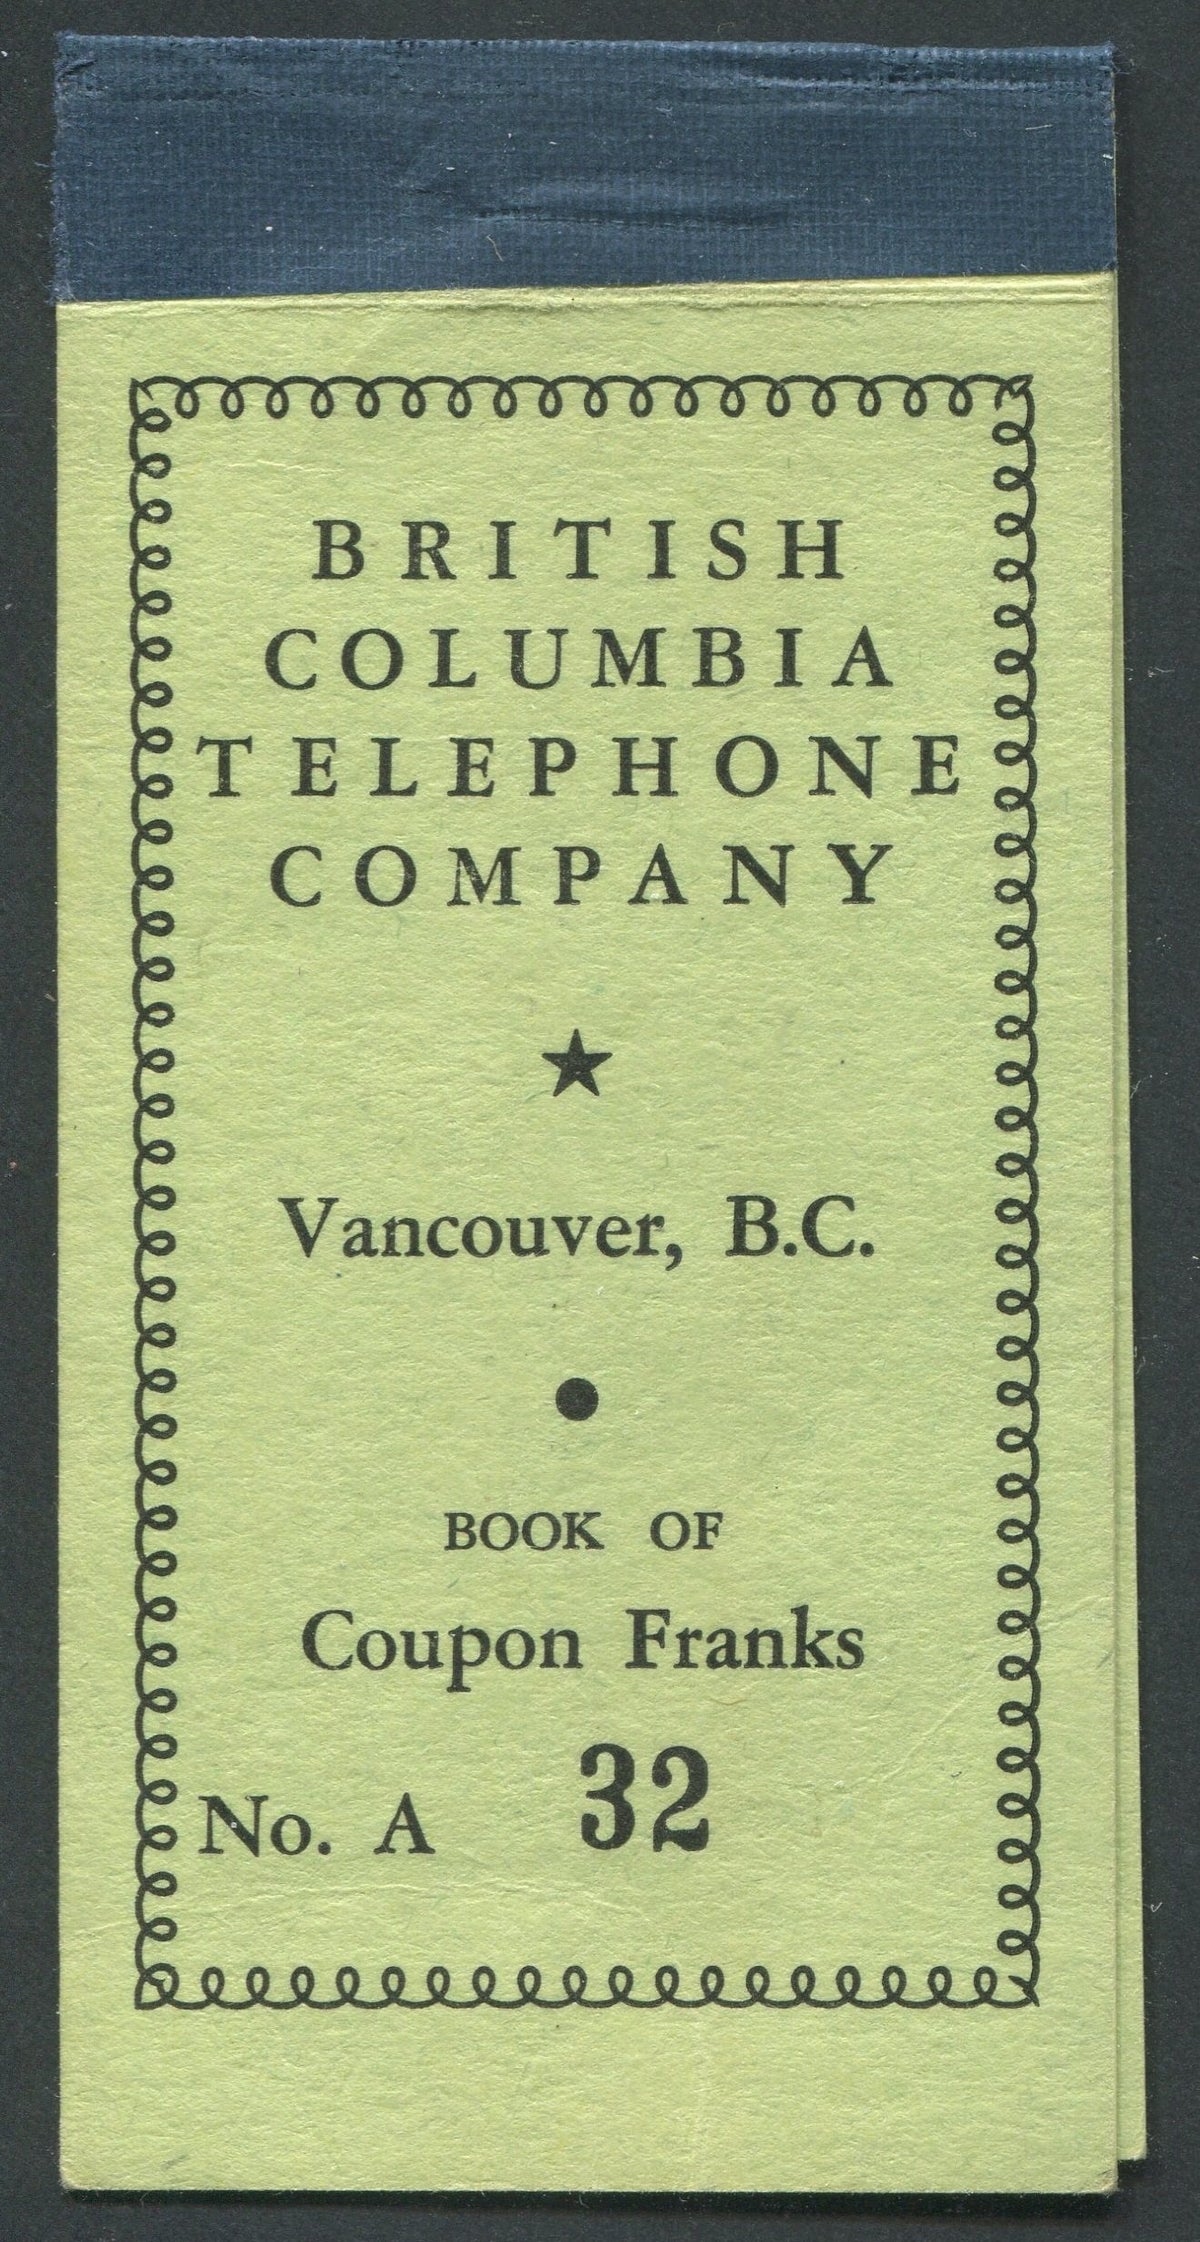 0288BC1708 - BCT190, BCT191, BCT192 - 1960 Booklet